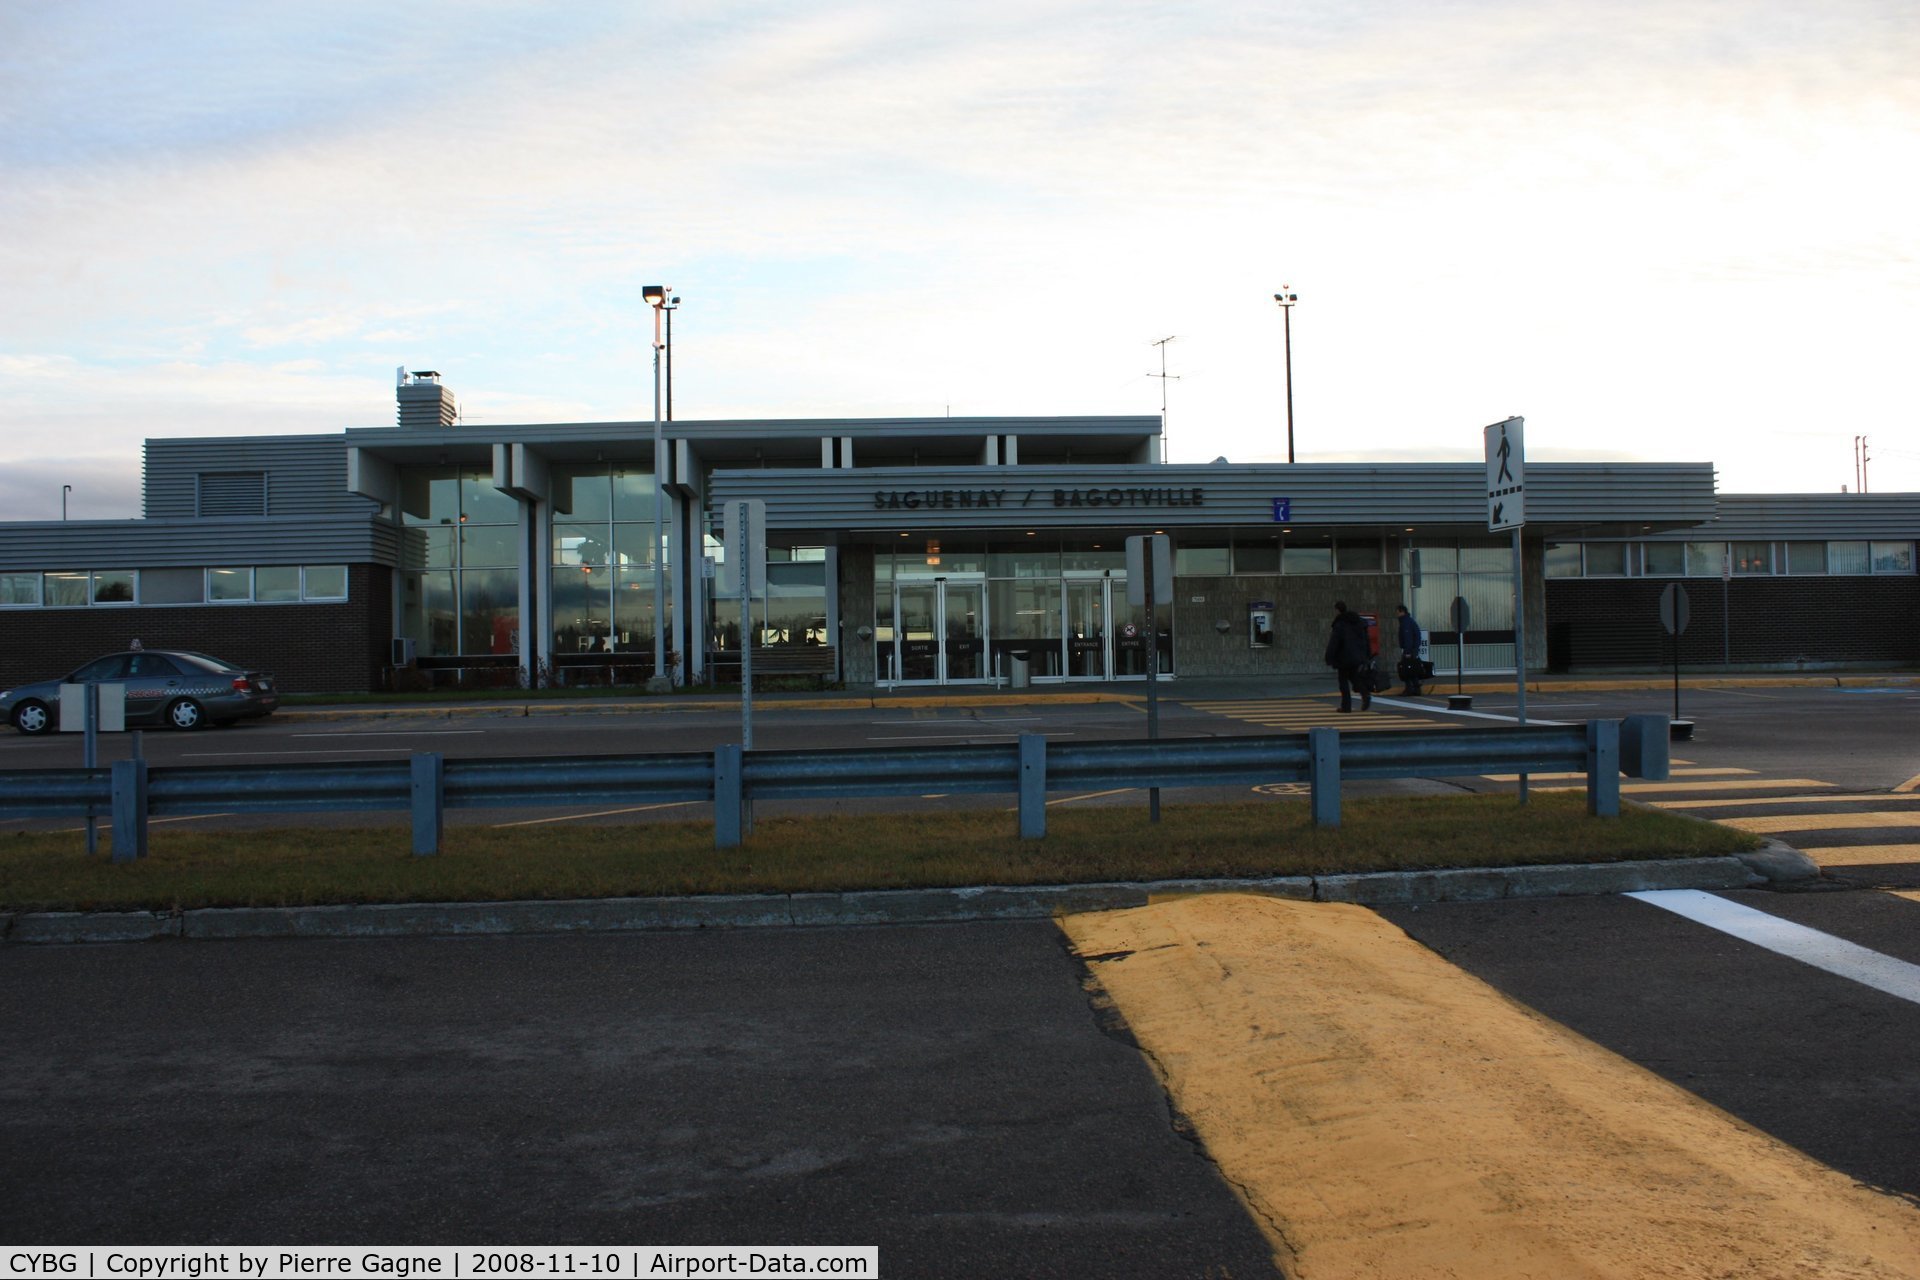 CFB Bagotville (Bagotville Airport), Bagotville, Quebec Canada (CYBG) - CFB Bagotville, civil terminal